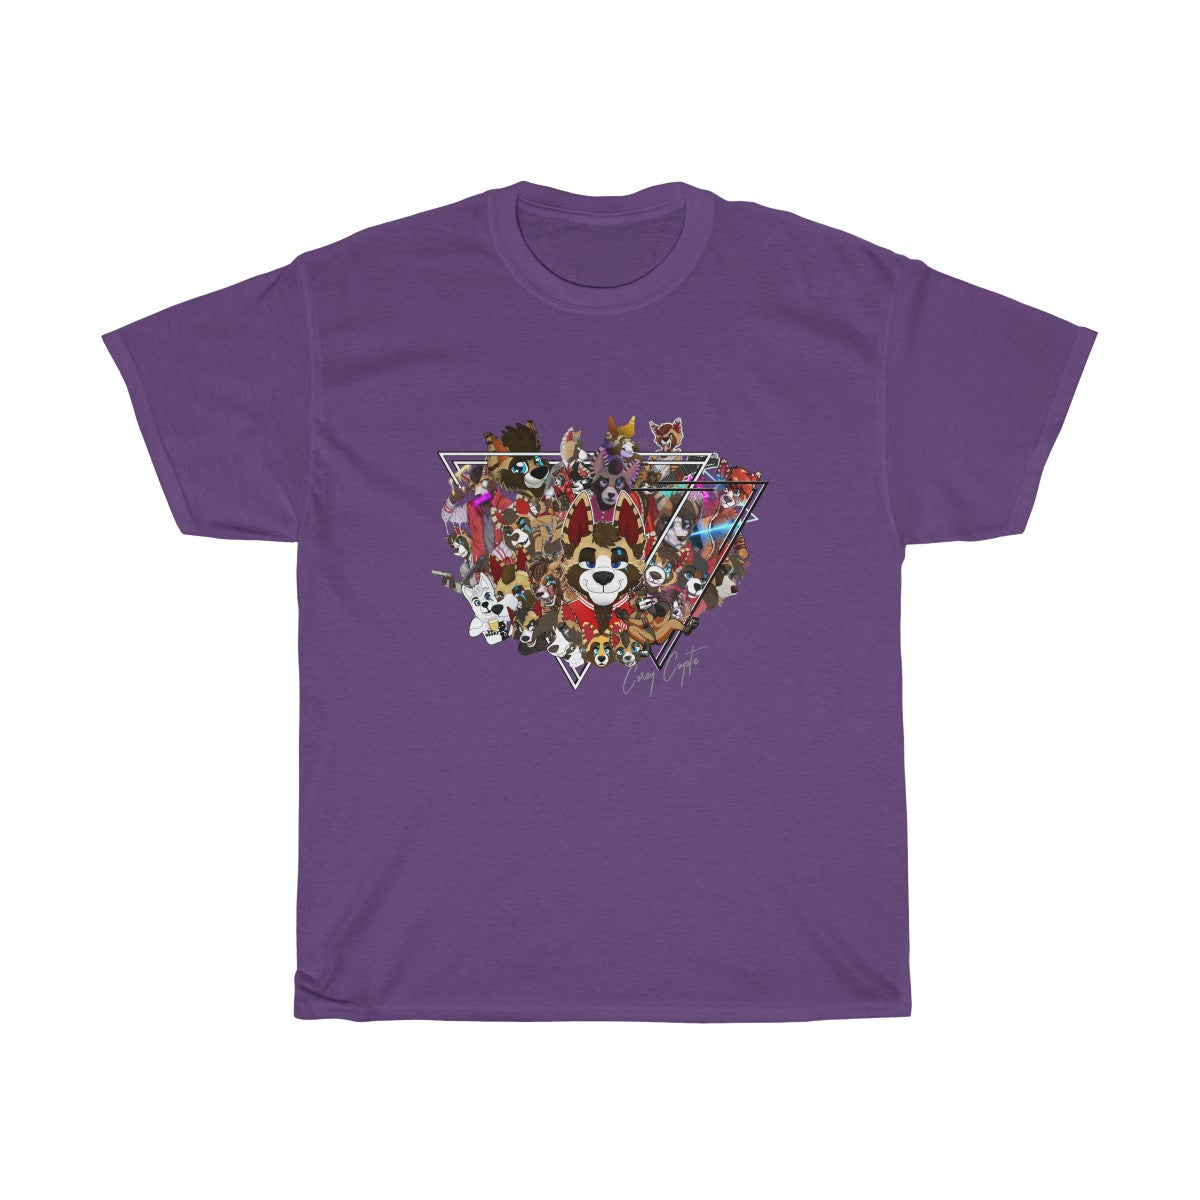 For The Fans - T-Shirt T-Shirt Corey Coyote Purple S 